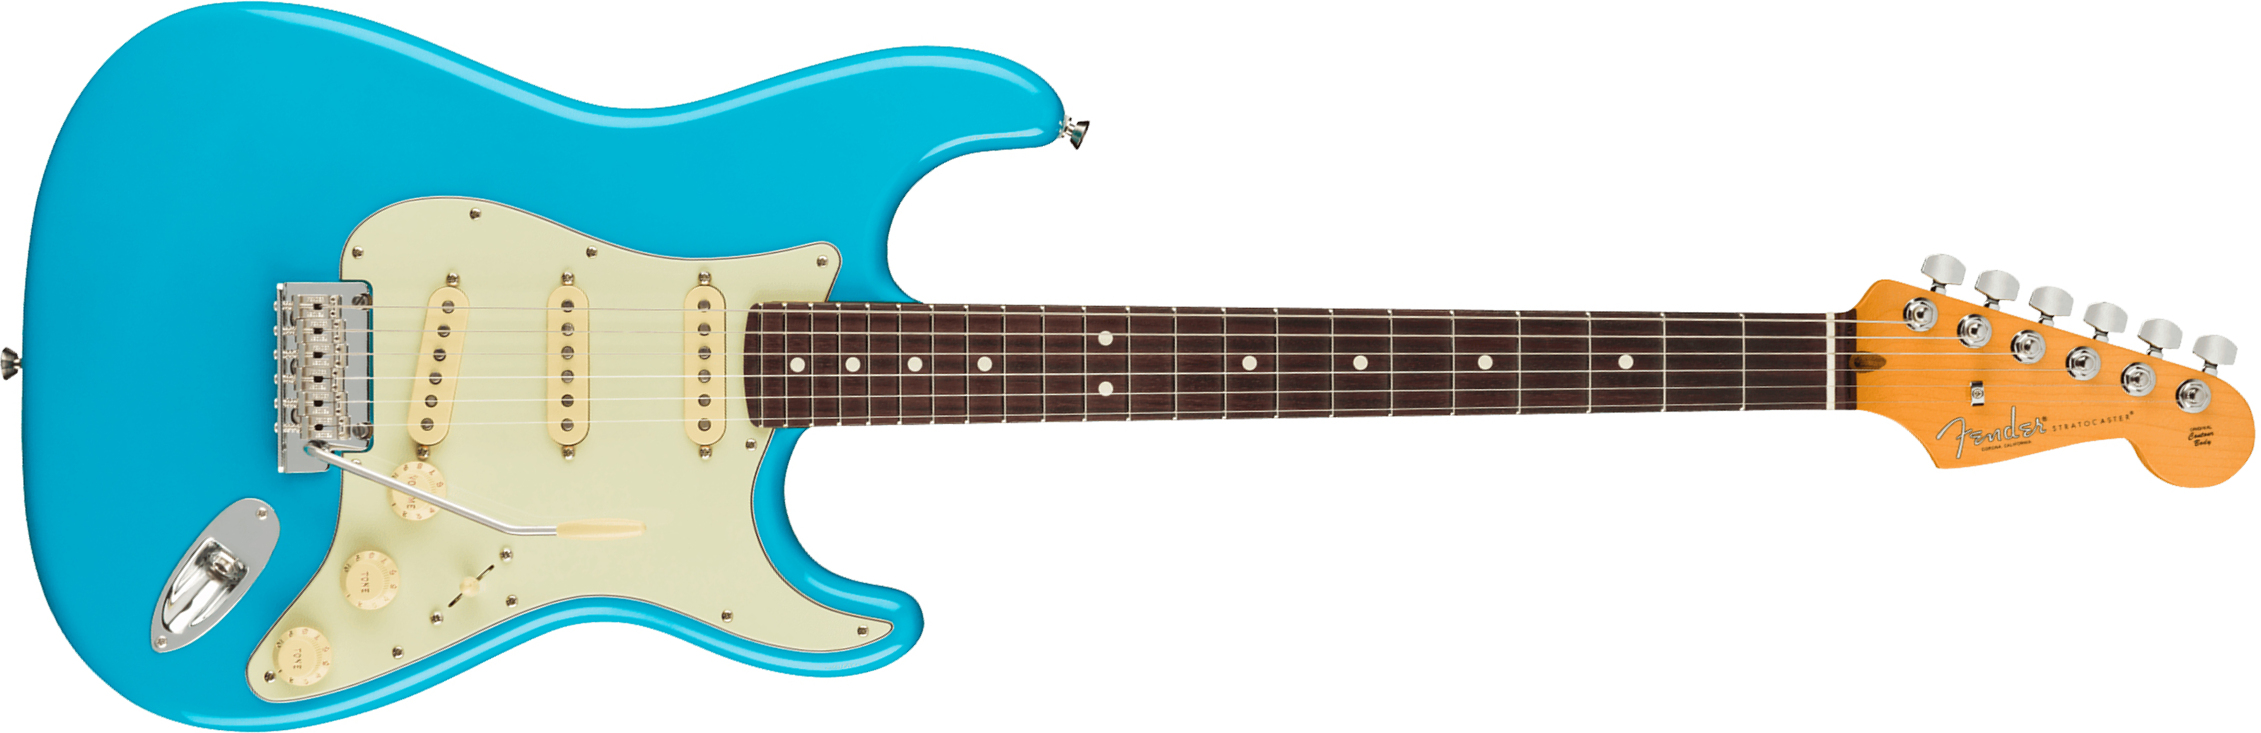 Fender Strat American Professional Ii Usa Rw - Miami Blue - Guitare Électrique Forme Str - Main picture